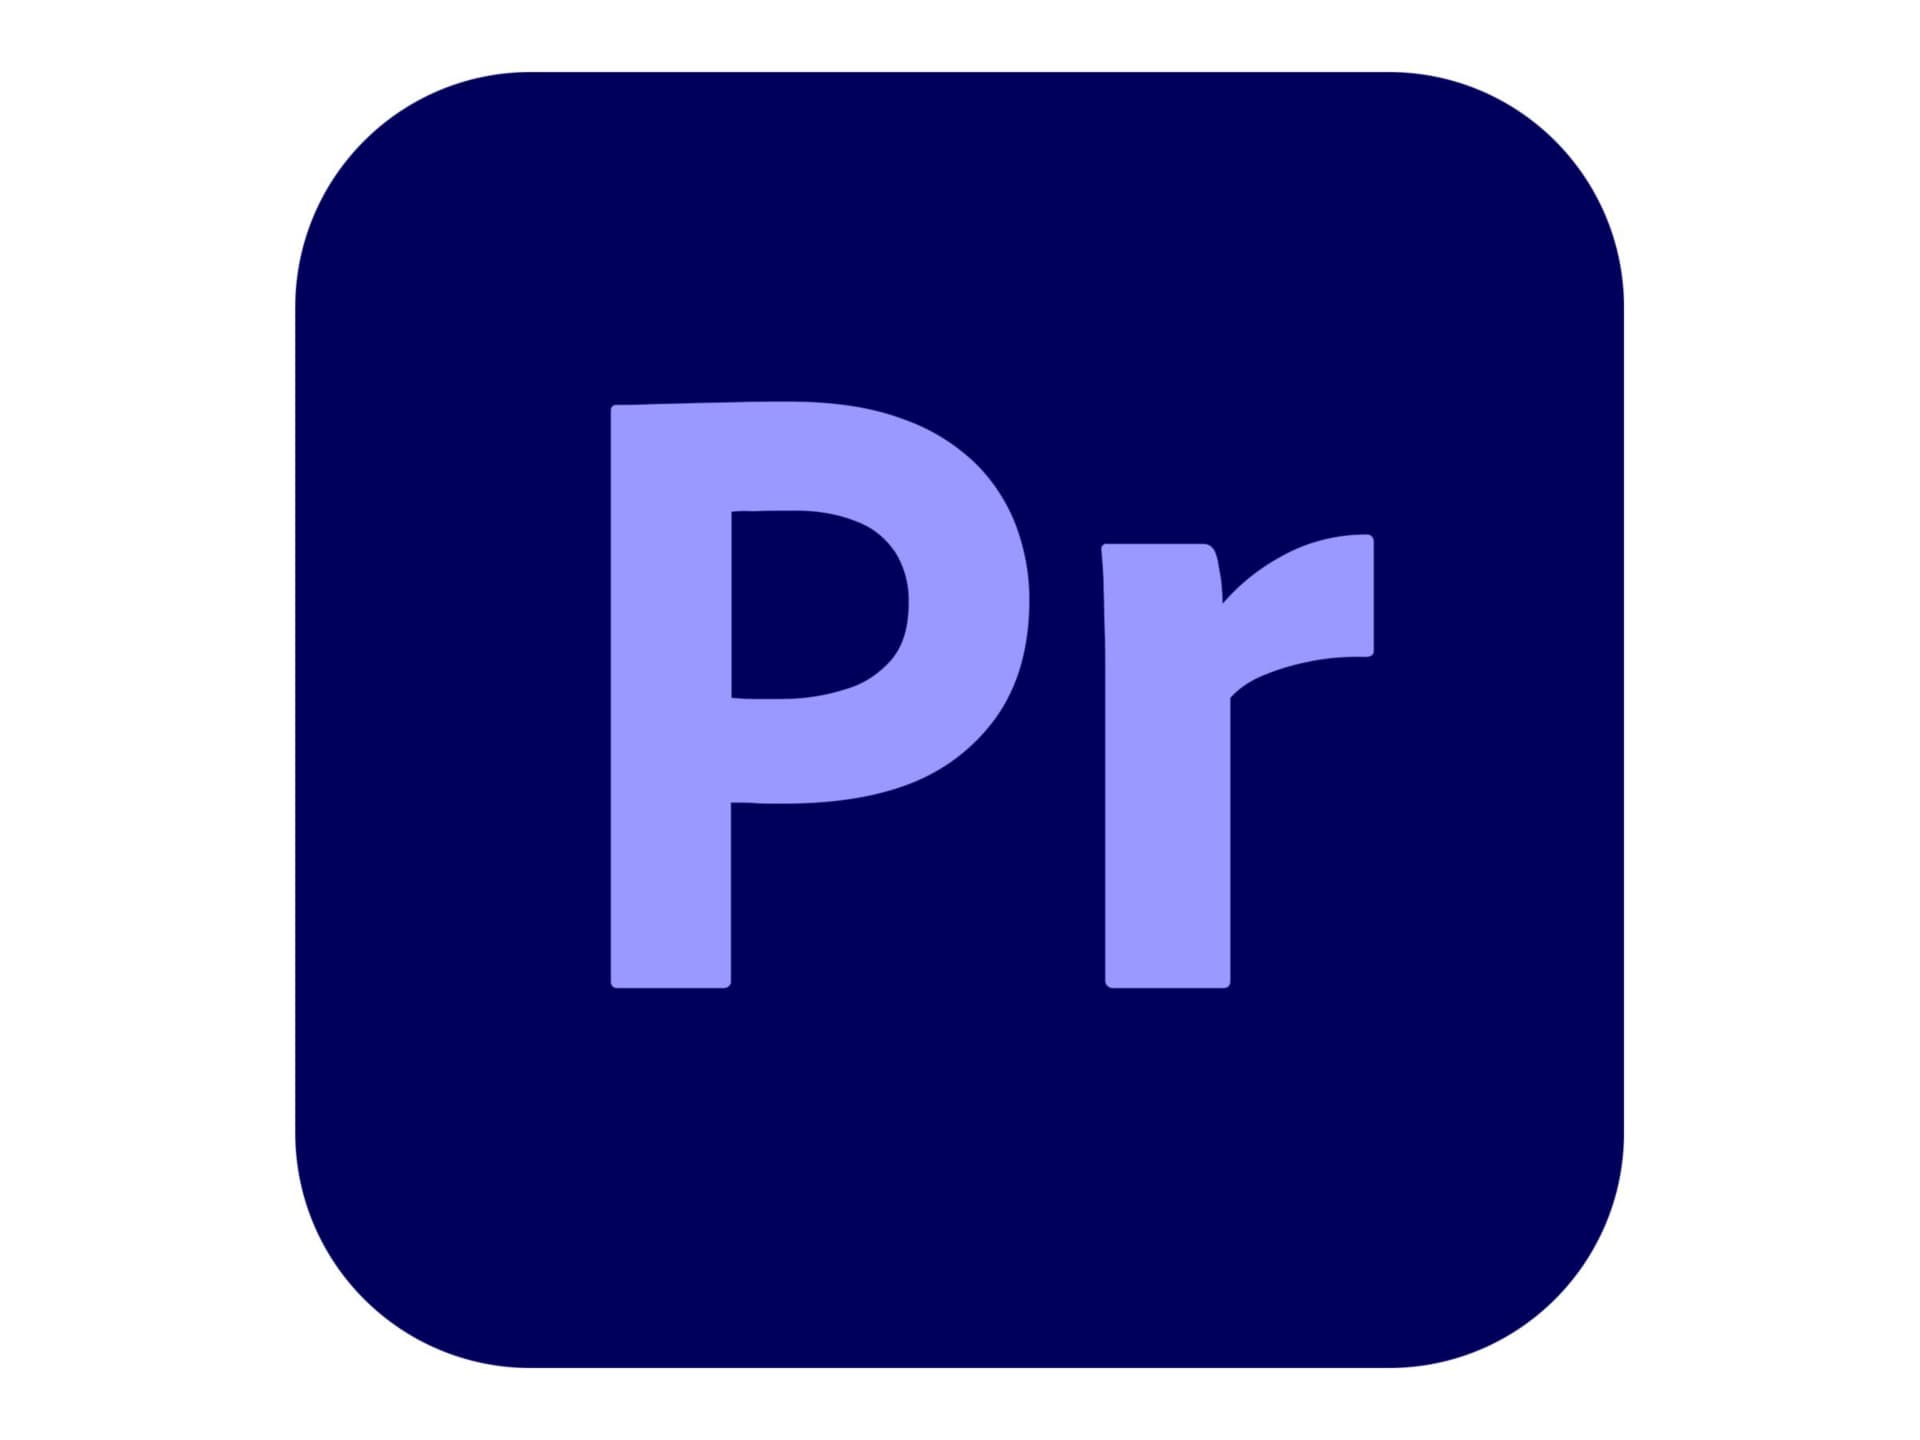 Adobe Premiere Pro CC for Enterprise - Subscription New (3 months) - 1 named user